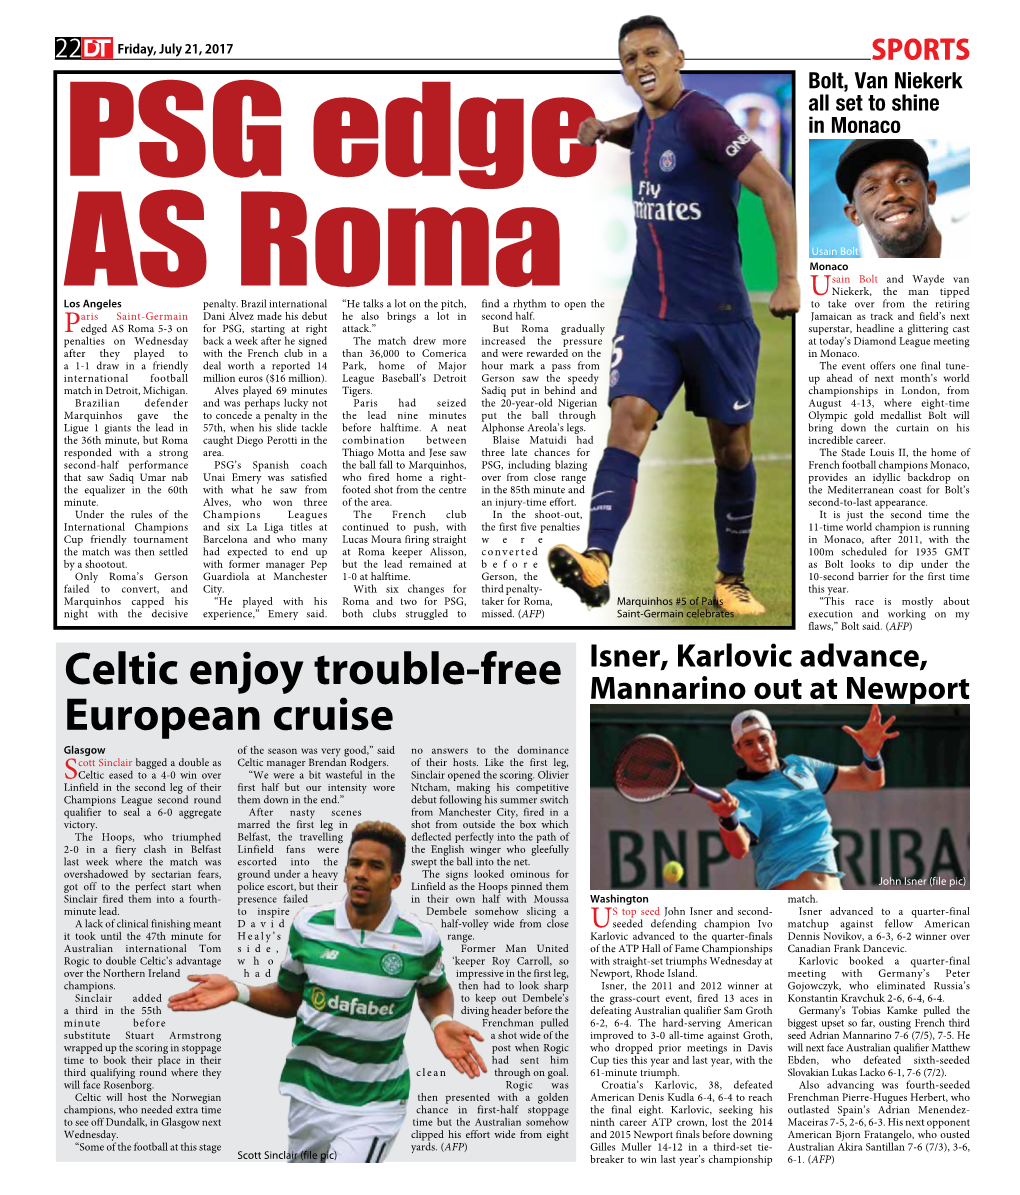 Celtic Enjoy Trouble-Free European Cruise